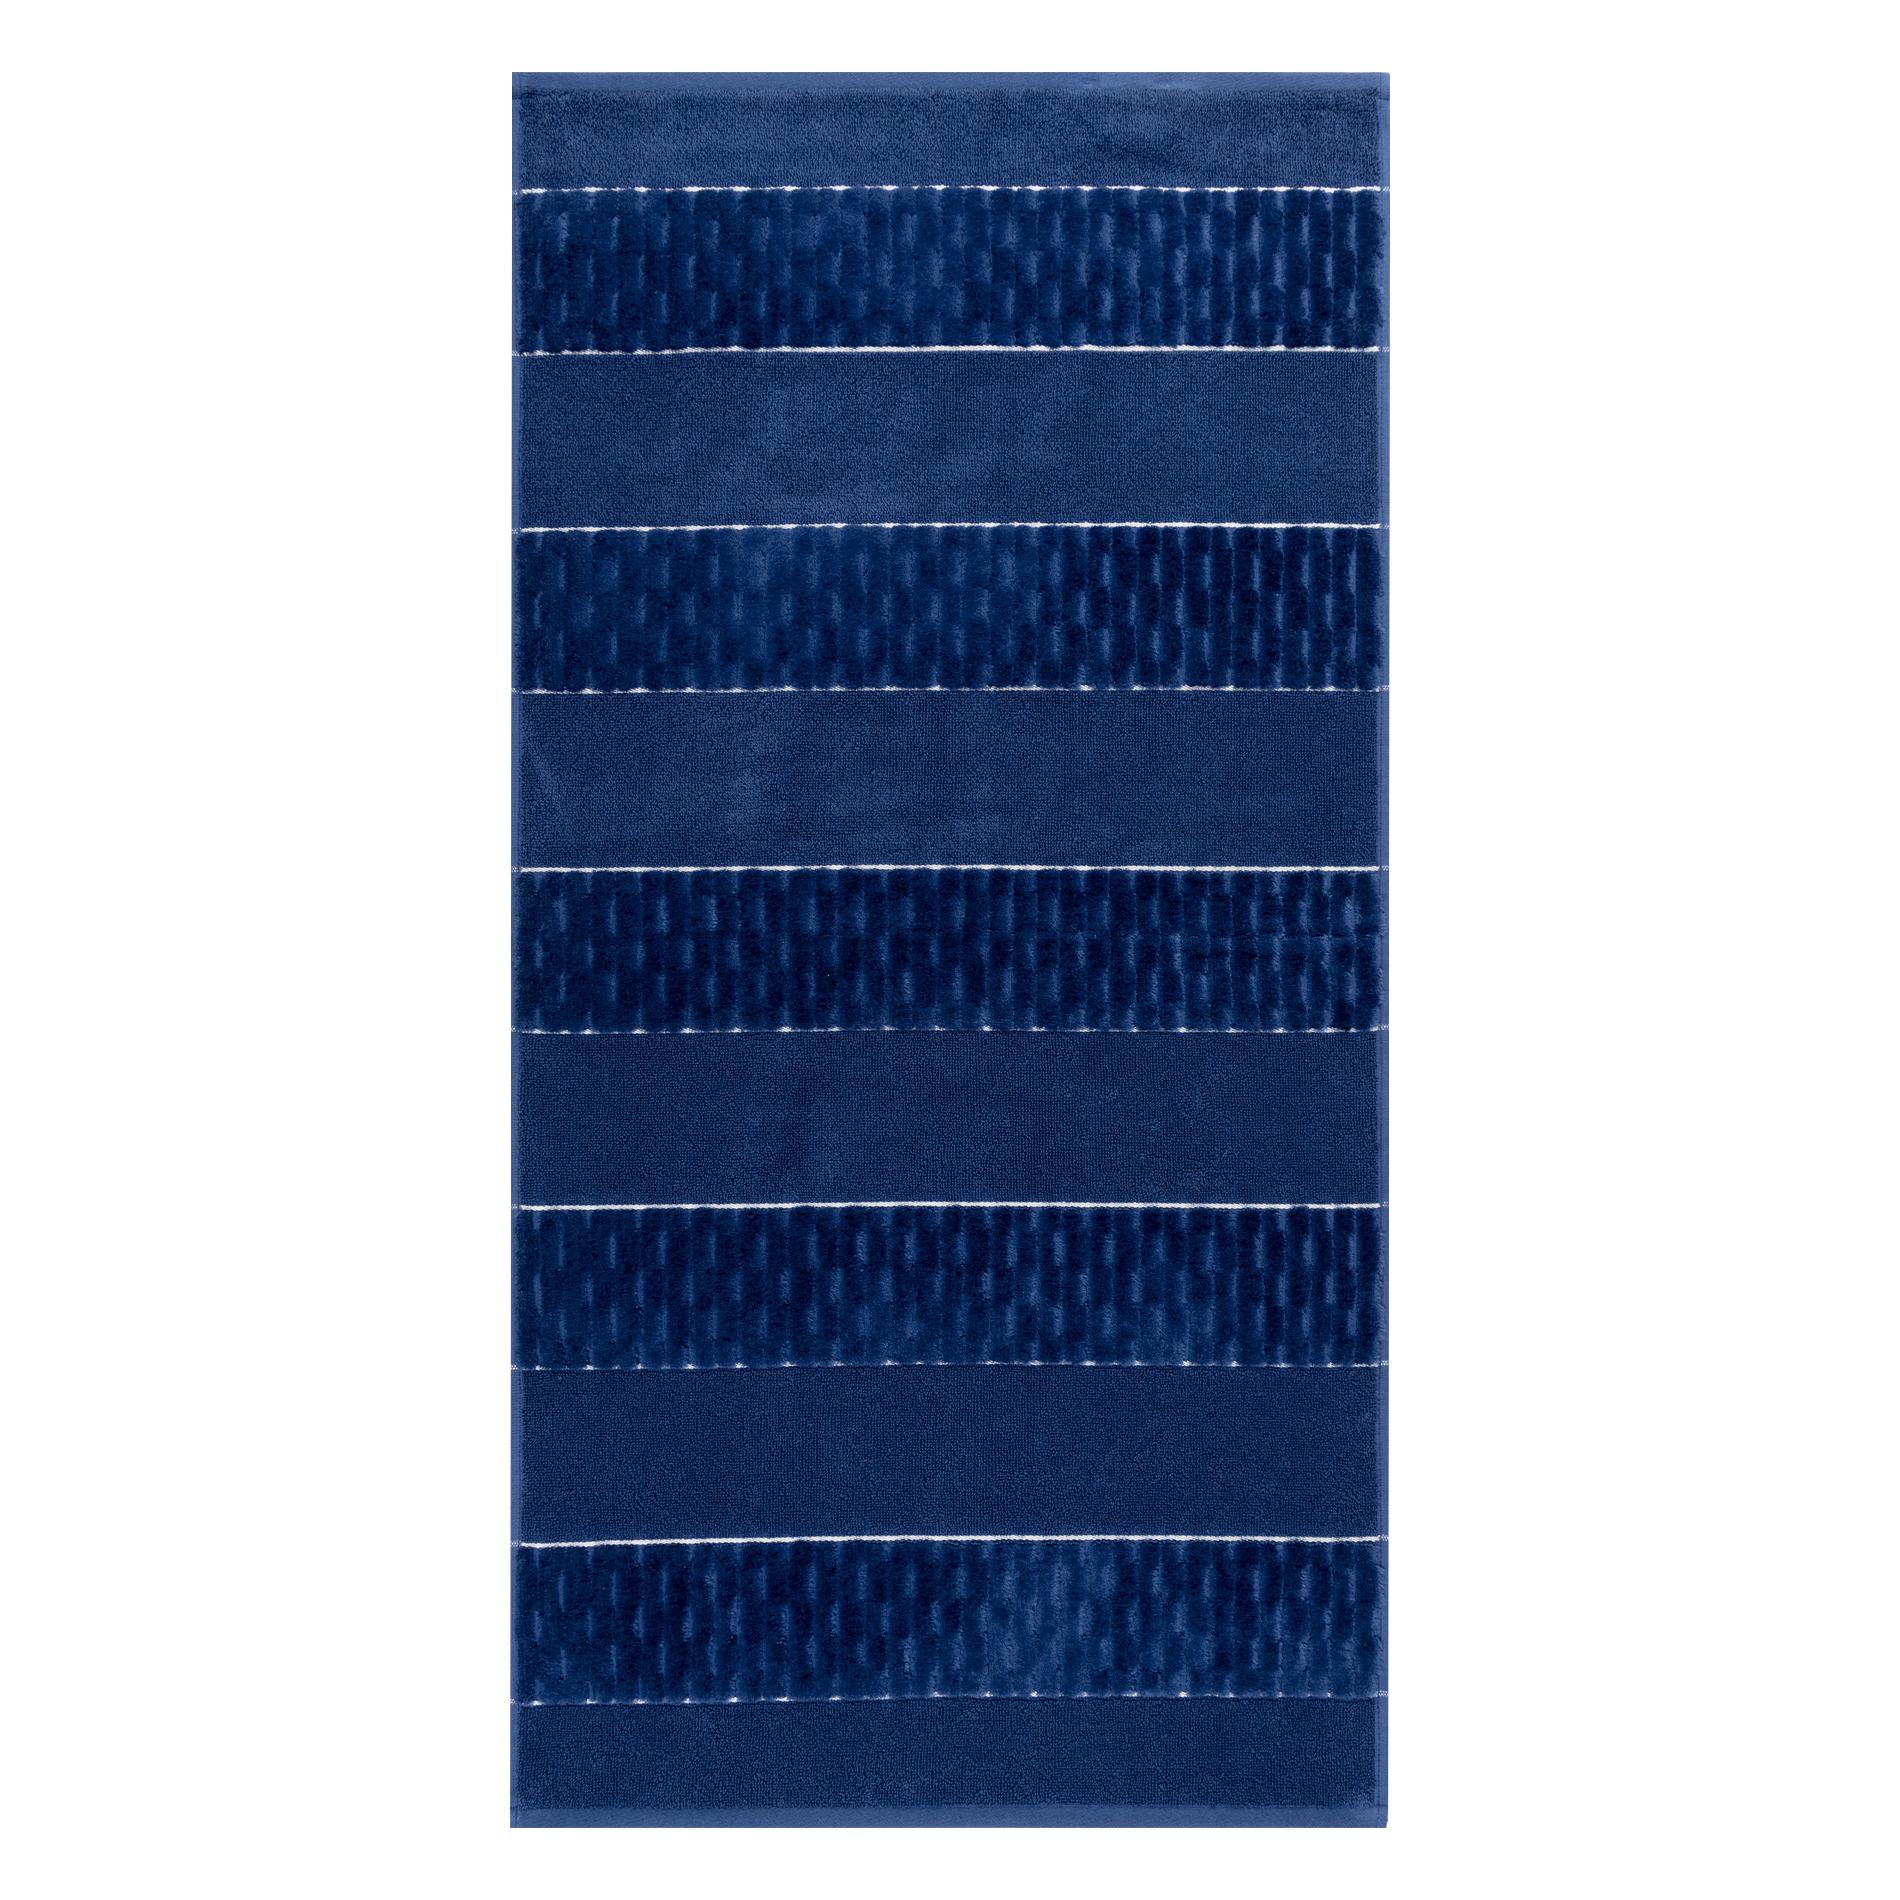 Махровое полотенце Cleanelly Esteta синее 50х100 см полотенце махровое lowly 50х100 см голубой хлопок